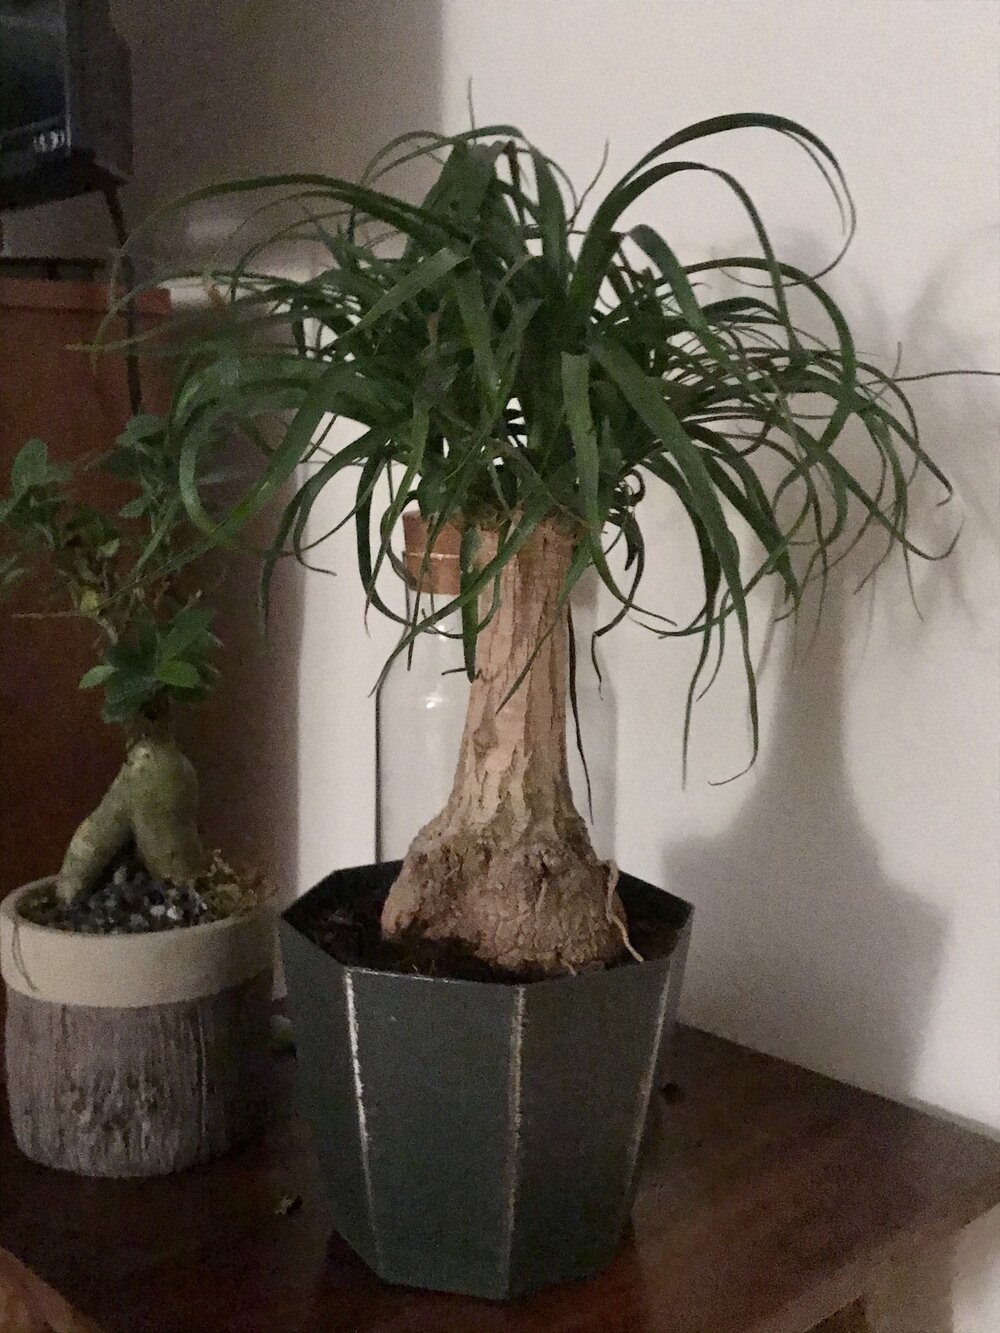 "Bobo" the Plant